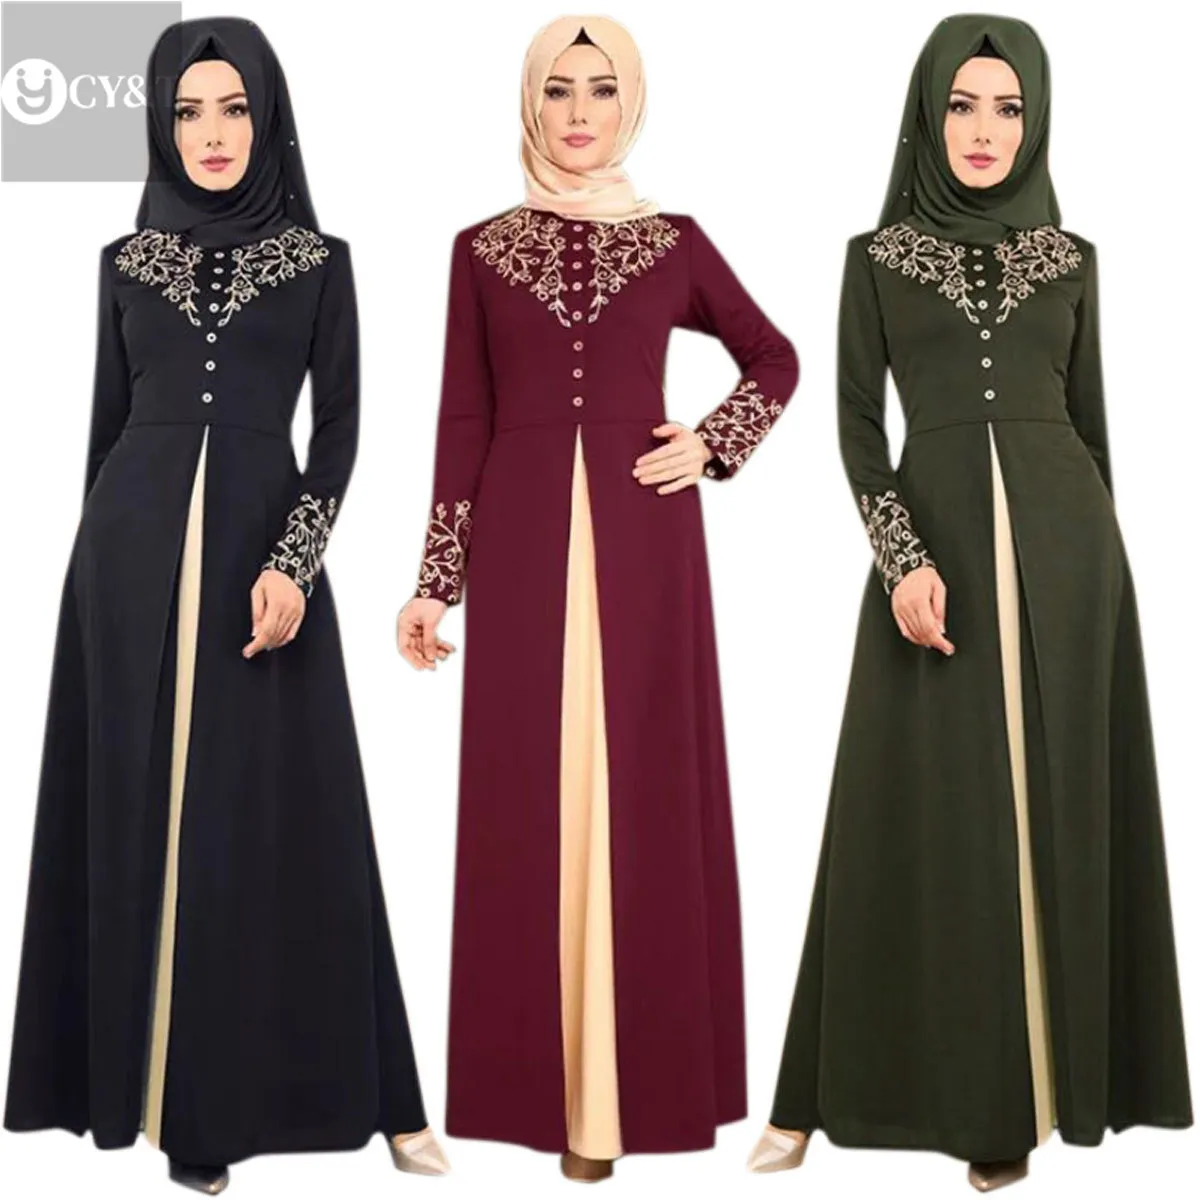 Vestido longo feminino de chiffon, vestido longo de chiffon com estampagem floral, estilo abaya, plus size, preto